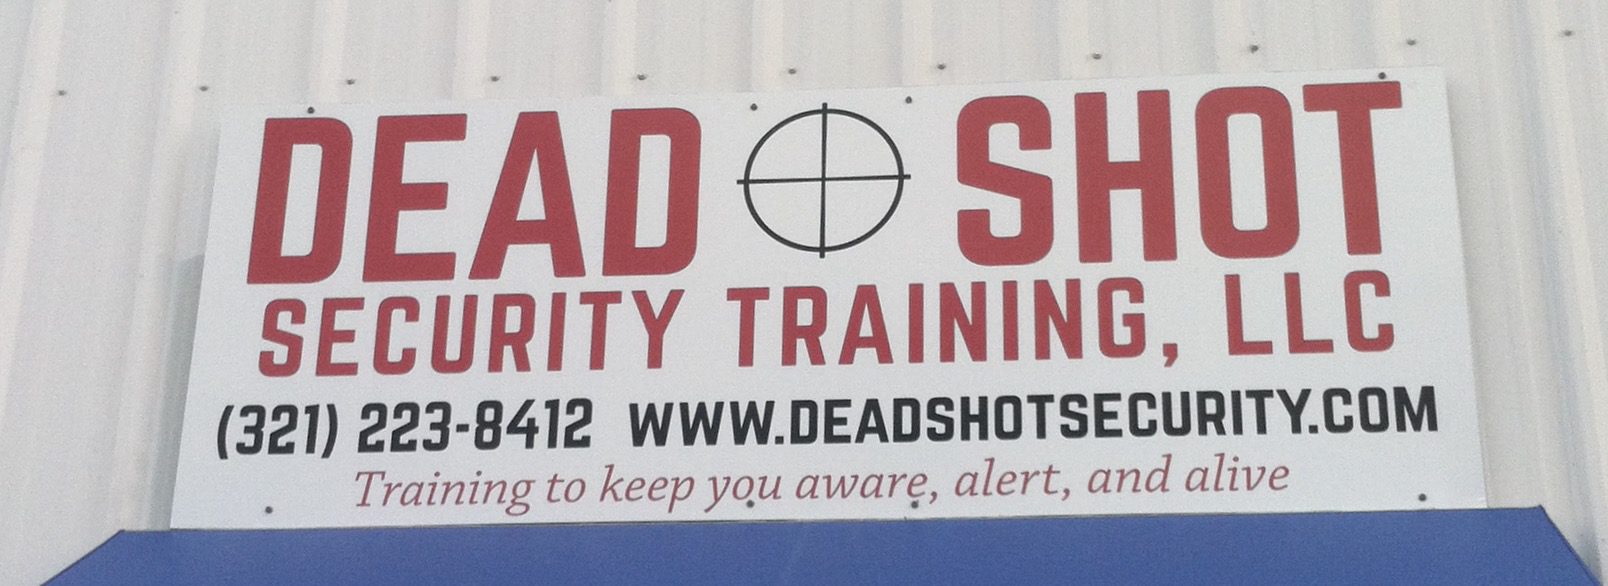 DEAD SHOT SECURITY TRAINING, LLC